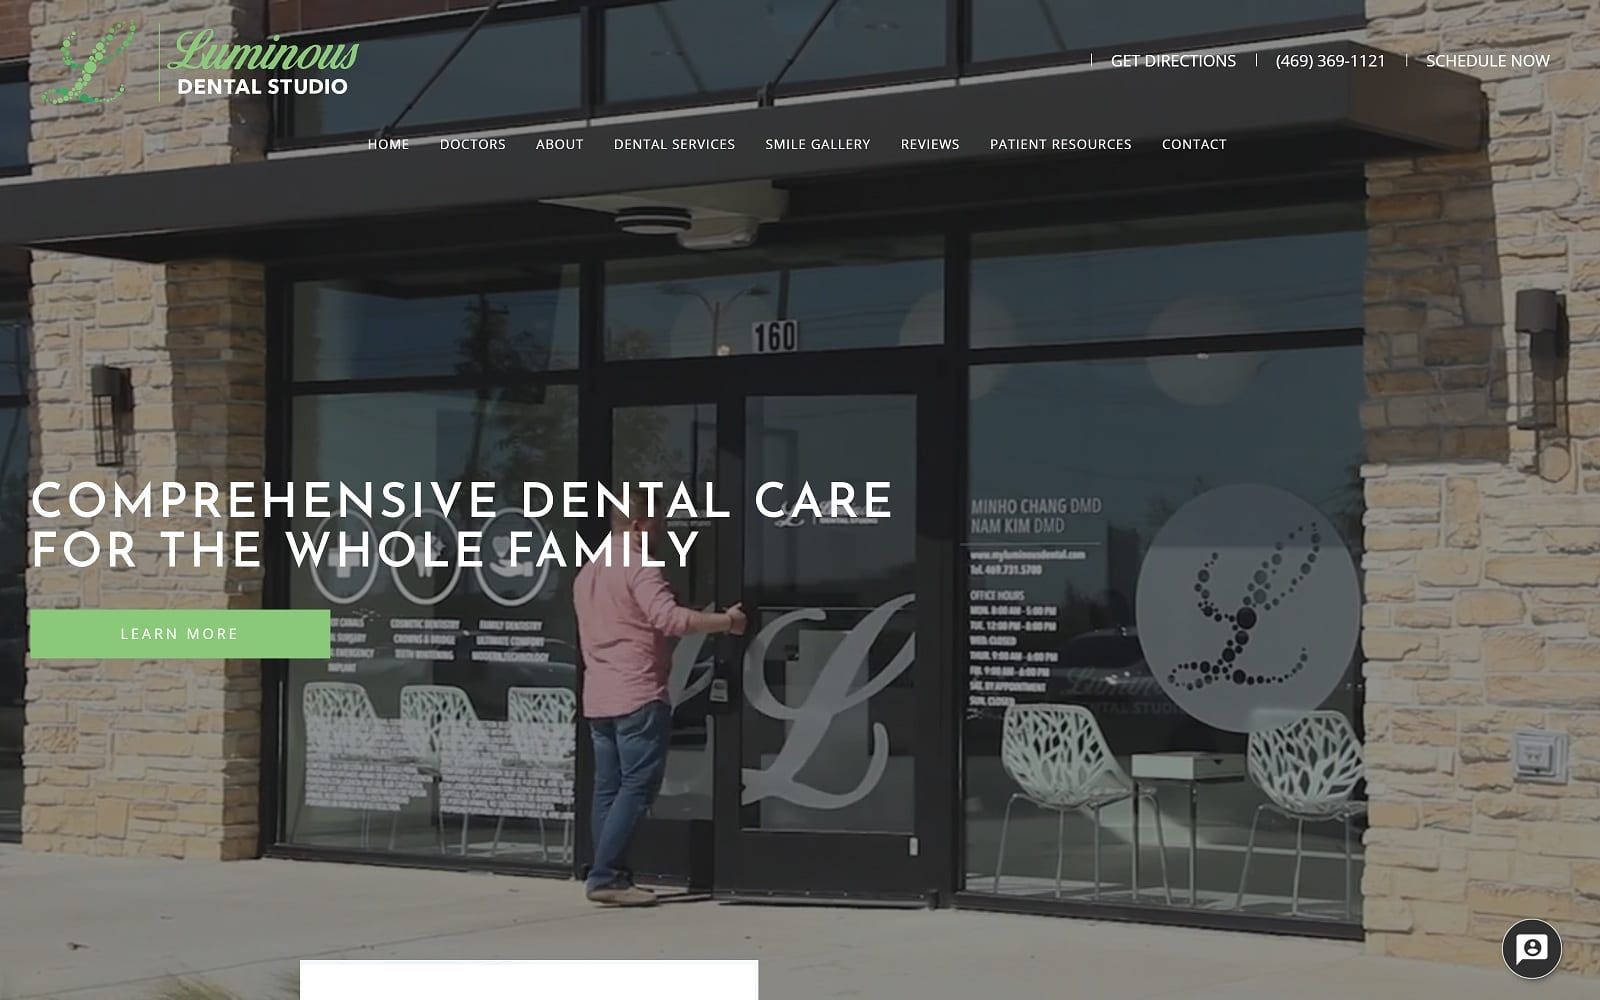 The screenshot of luminous dental studio myluminousdental. Com website